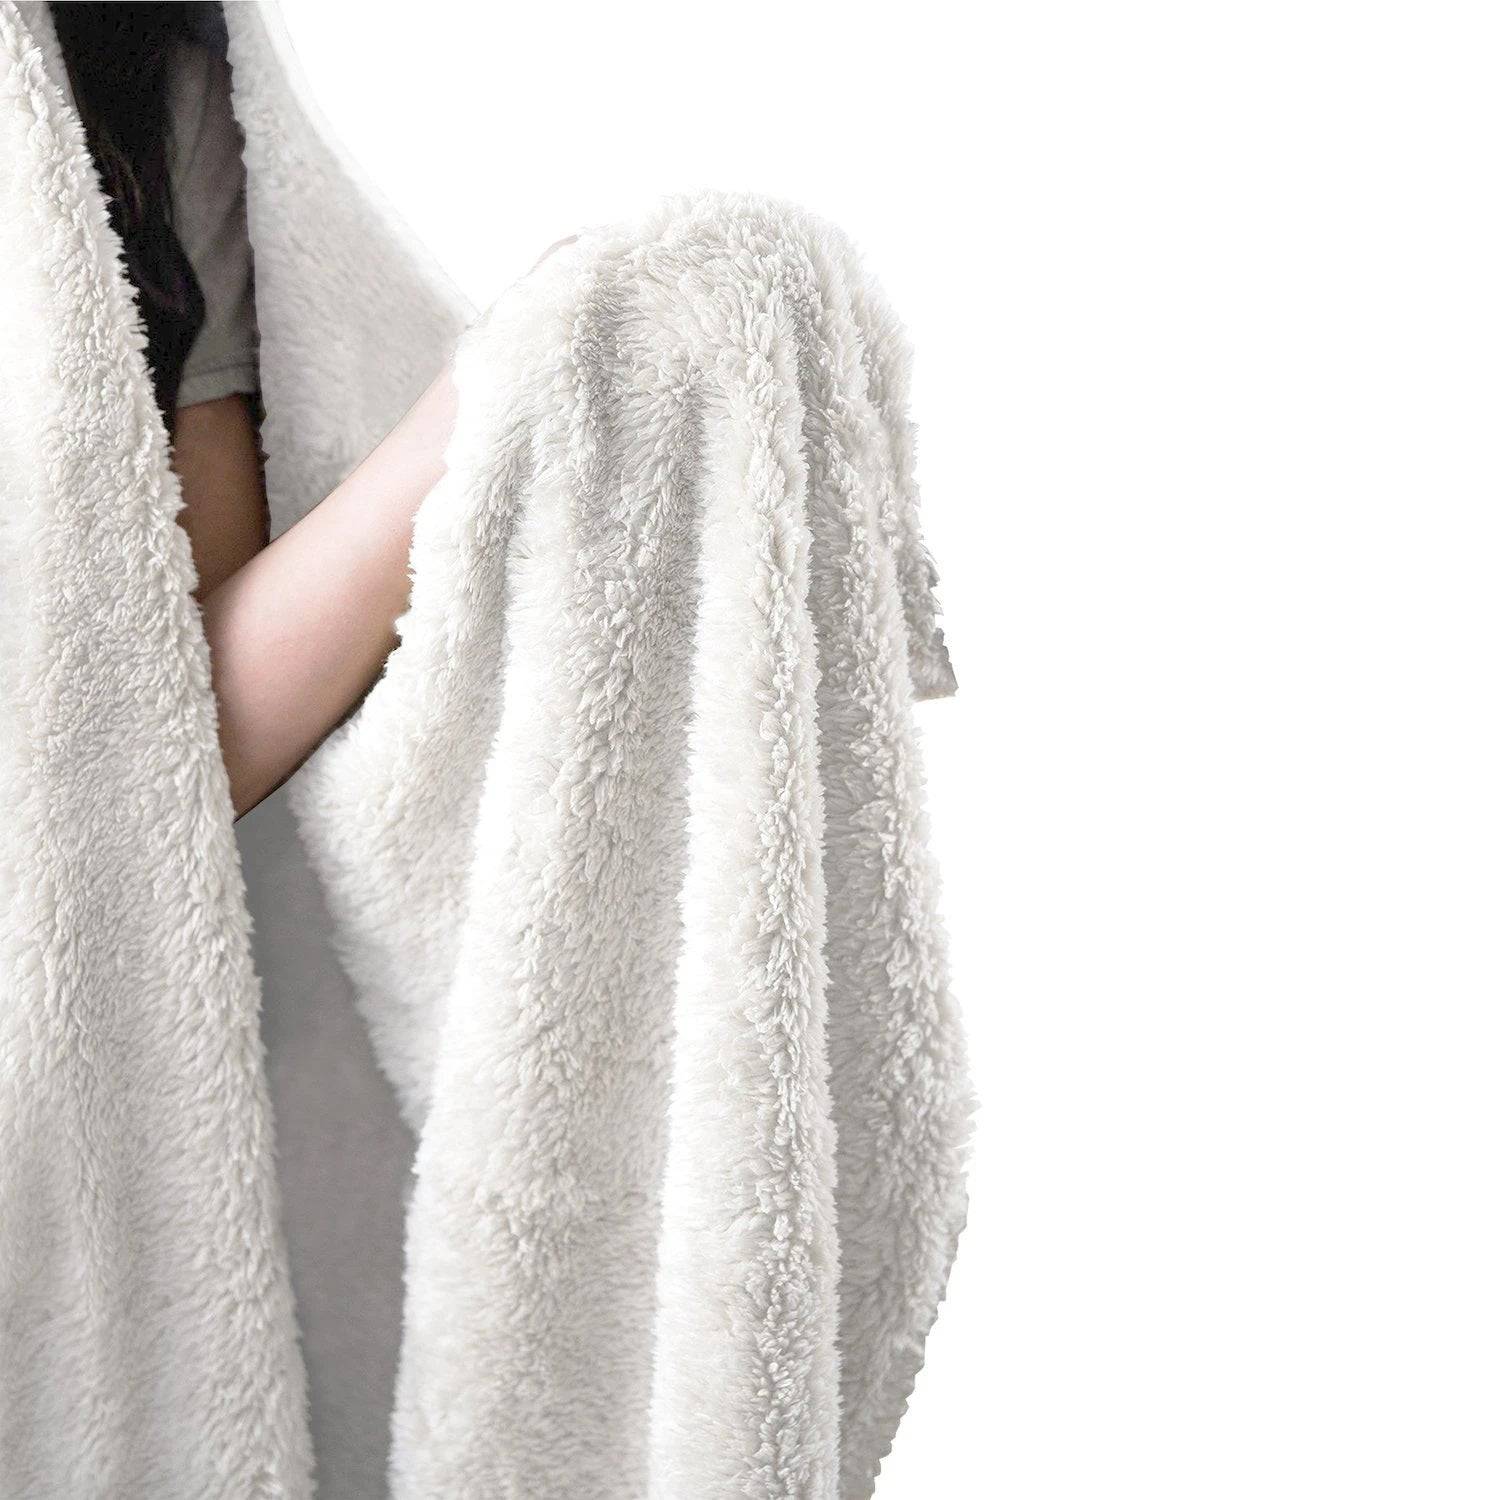 All The Faves Hooded Blanket, Art Design Works, | iEDM